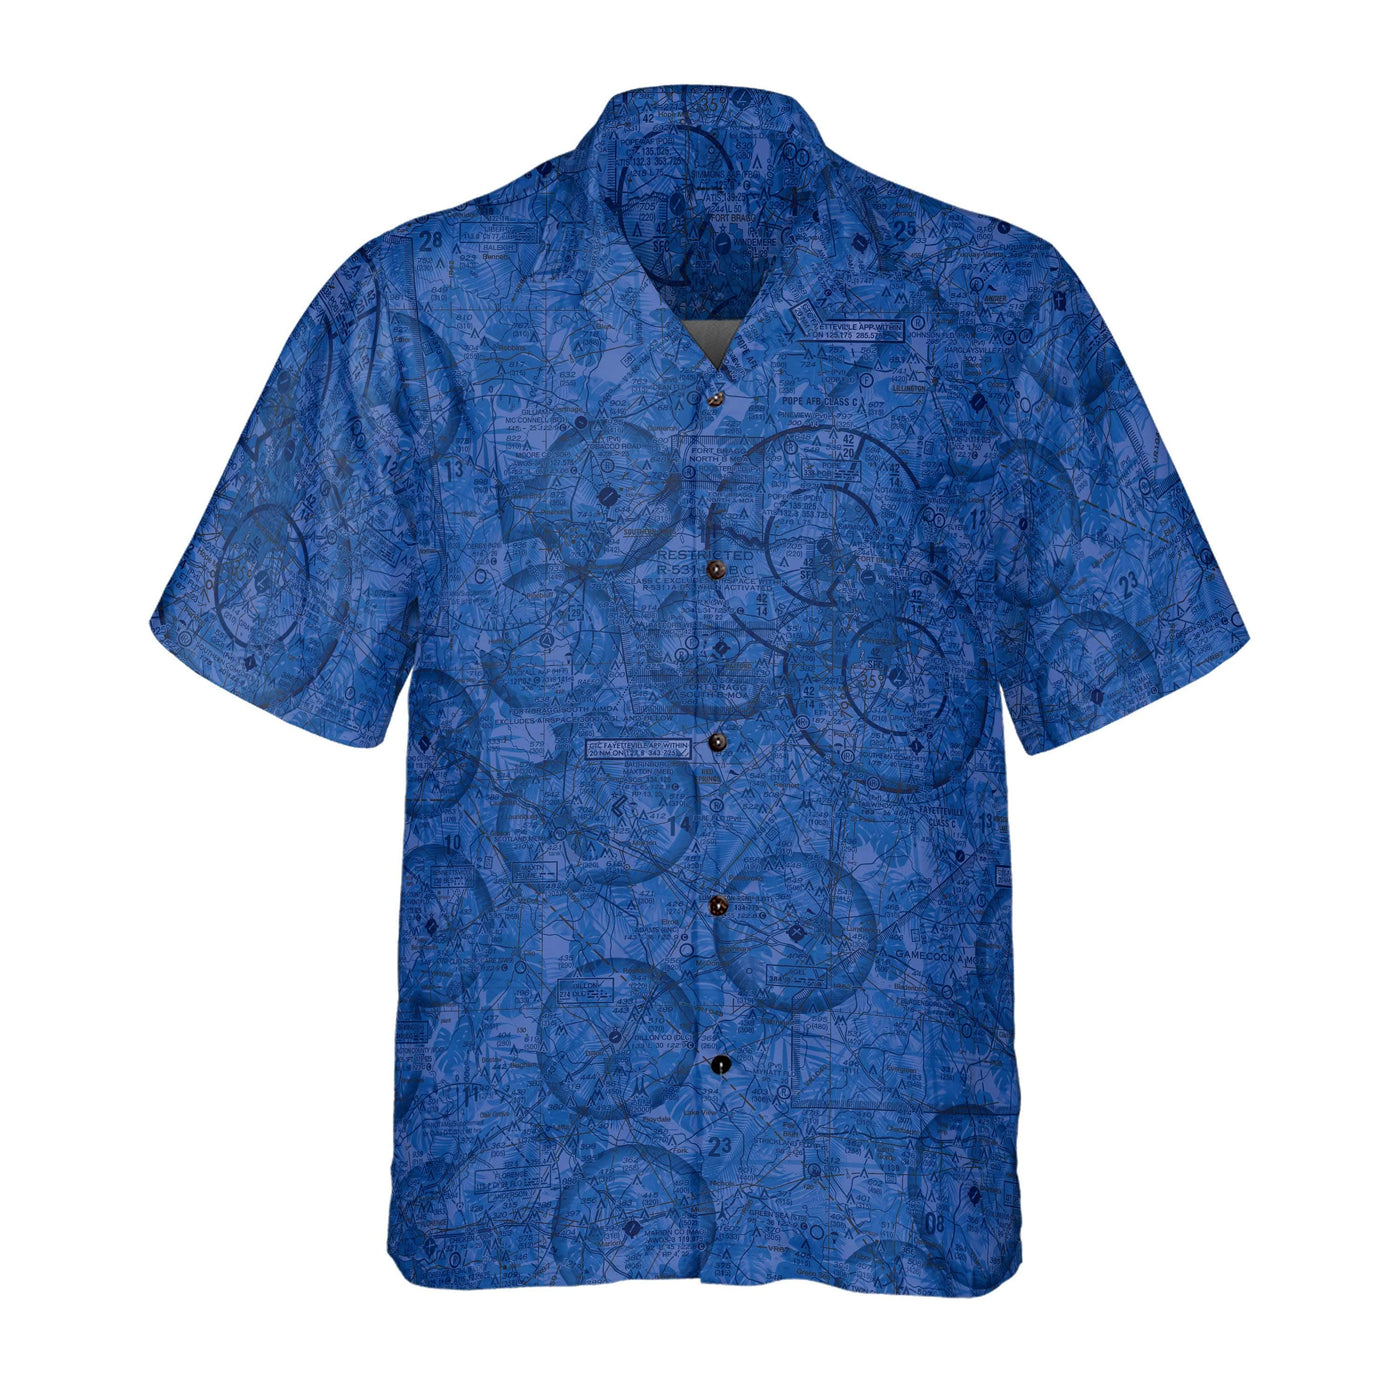 AOP Coconut Button Shirt The Ft Bragg Tropical Blue Coconut Button Camp Shirt